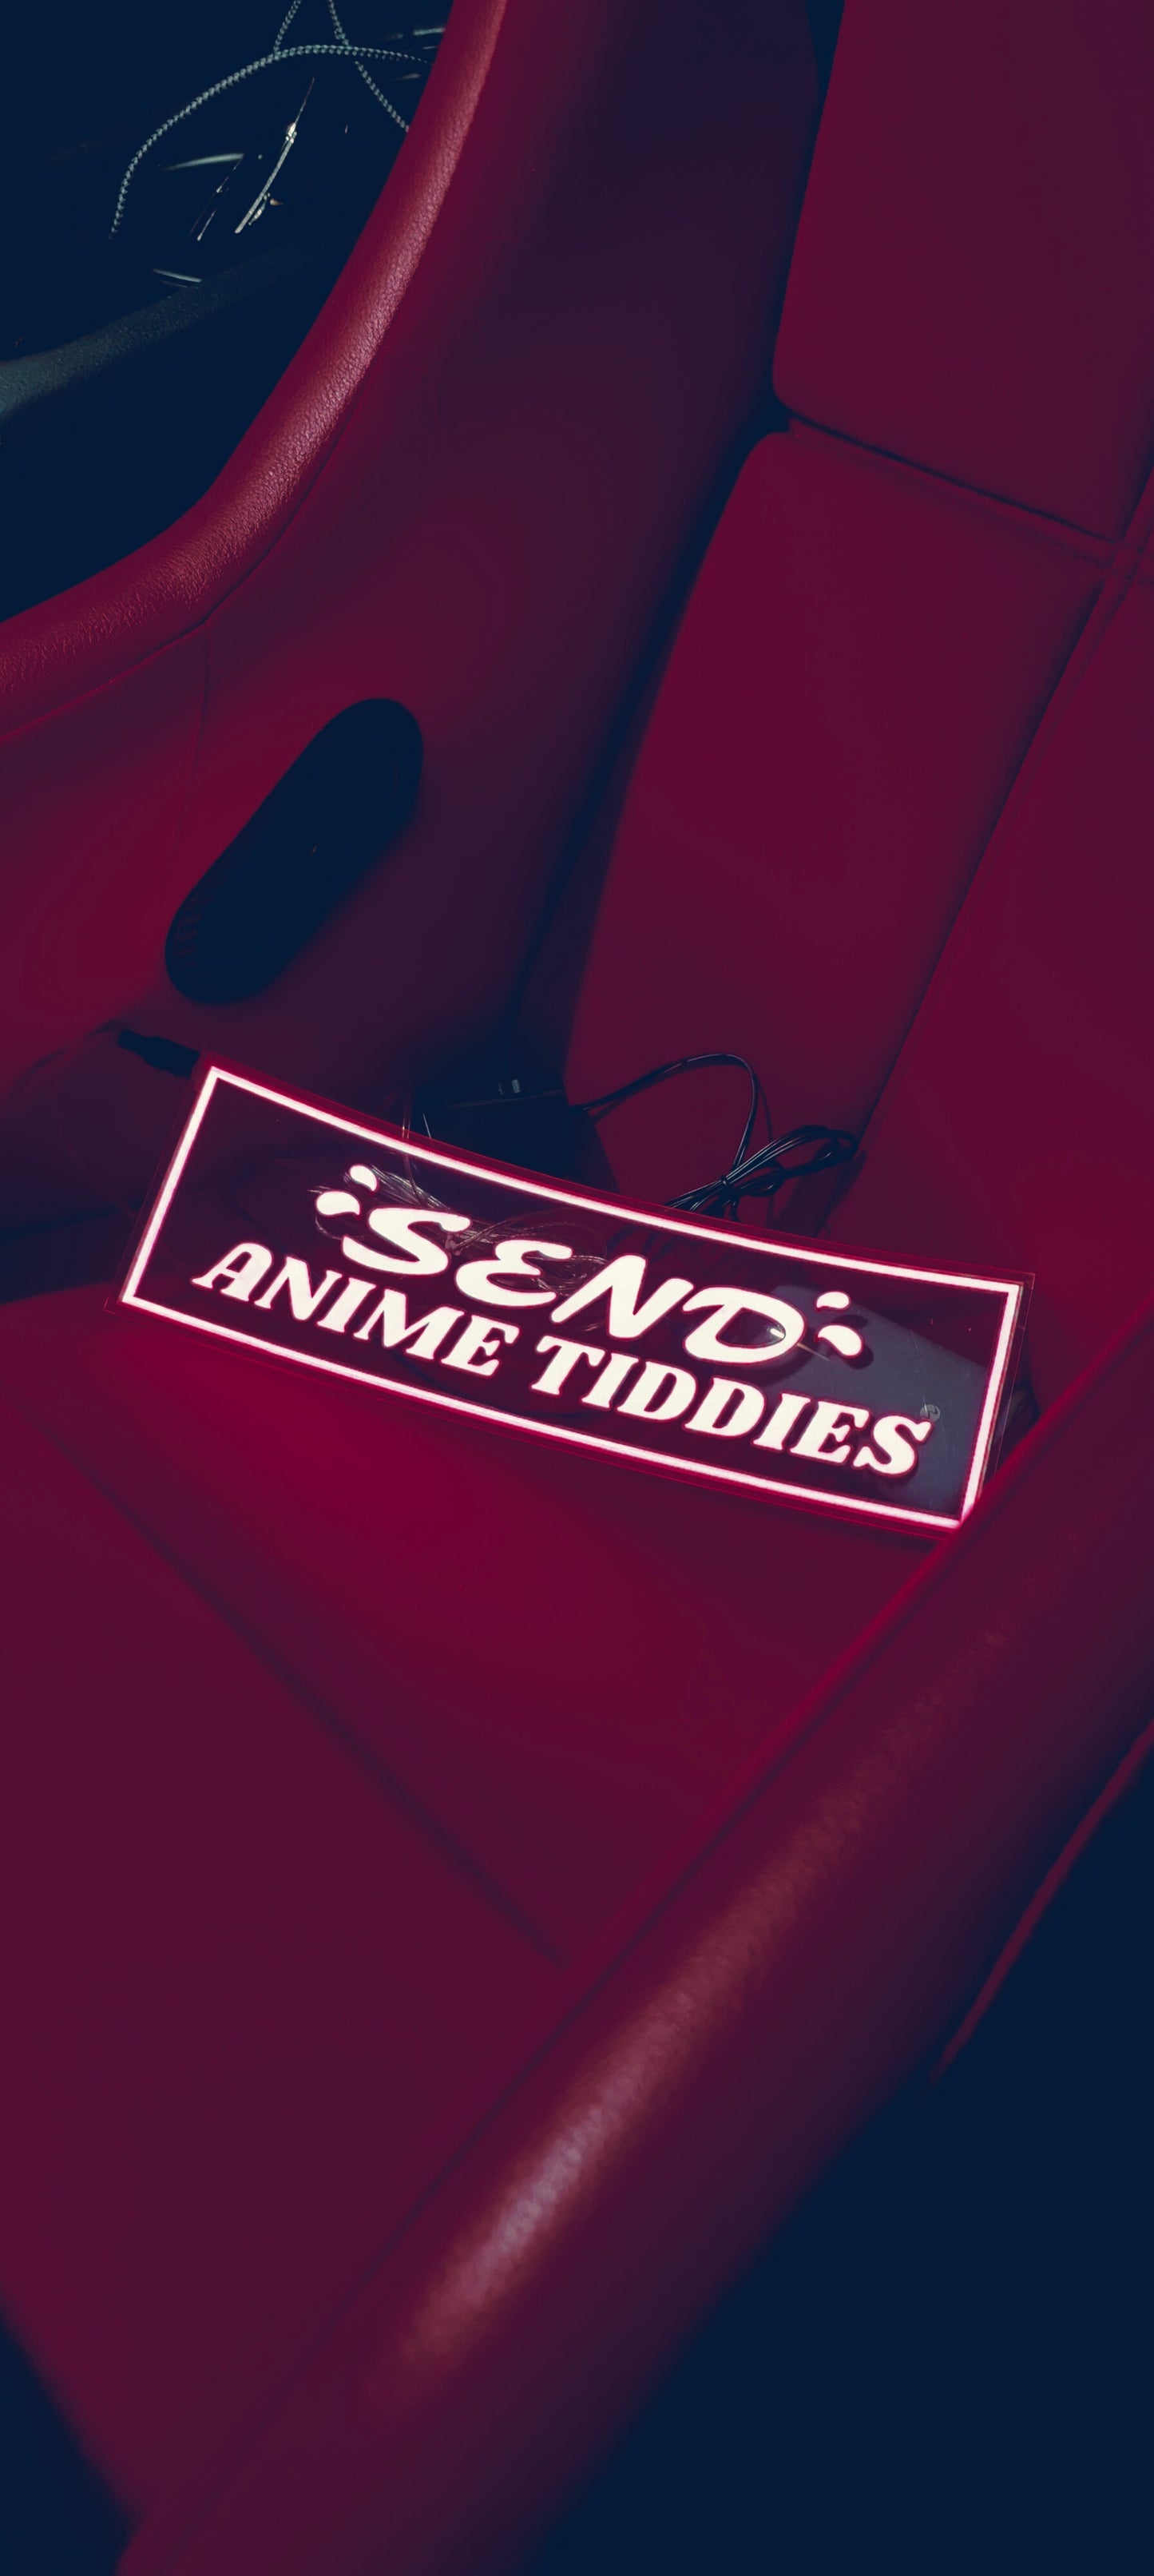 Send Anime Tiddies - Glow Panel